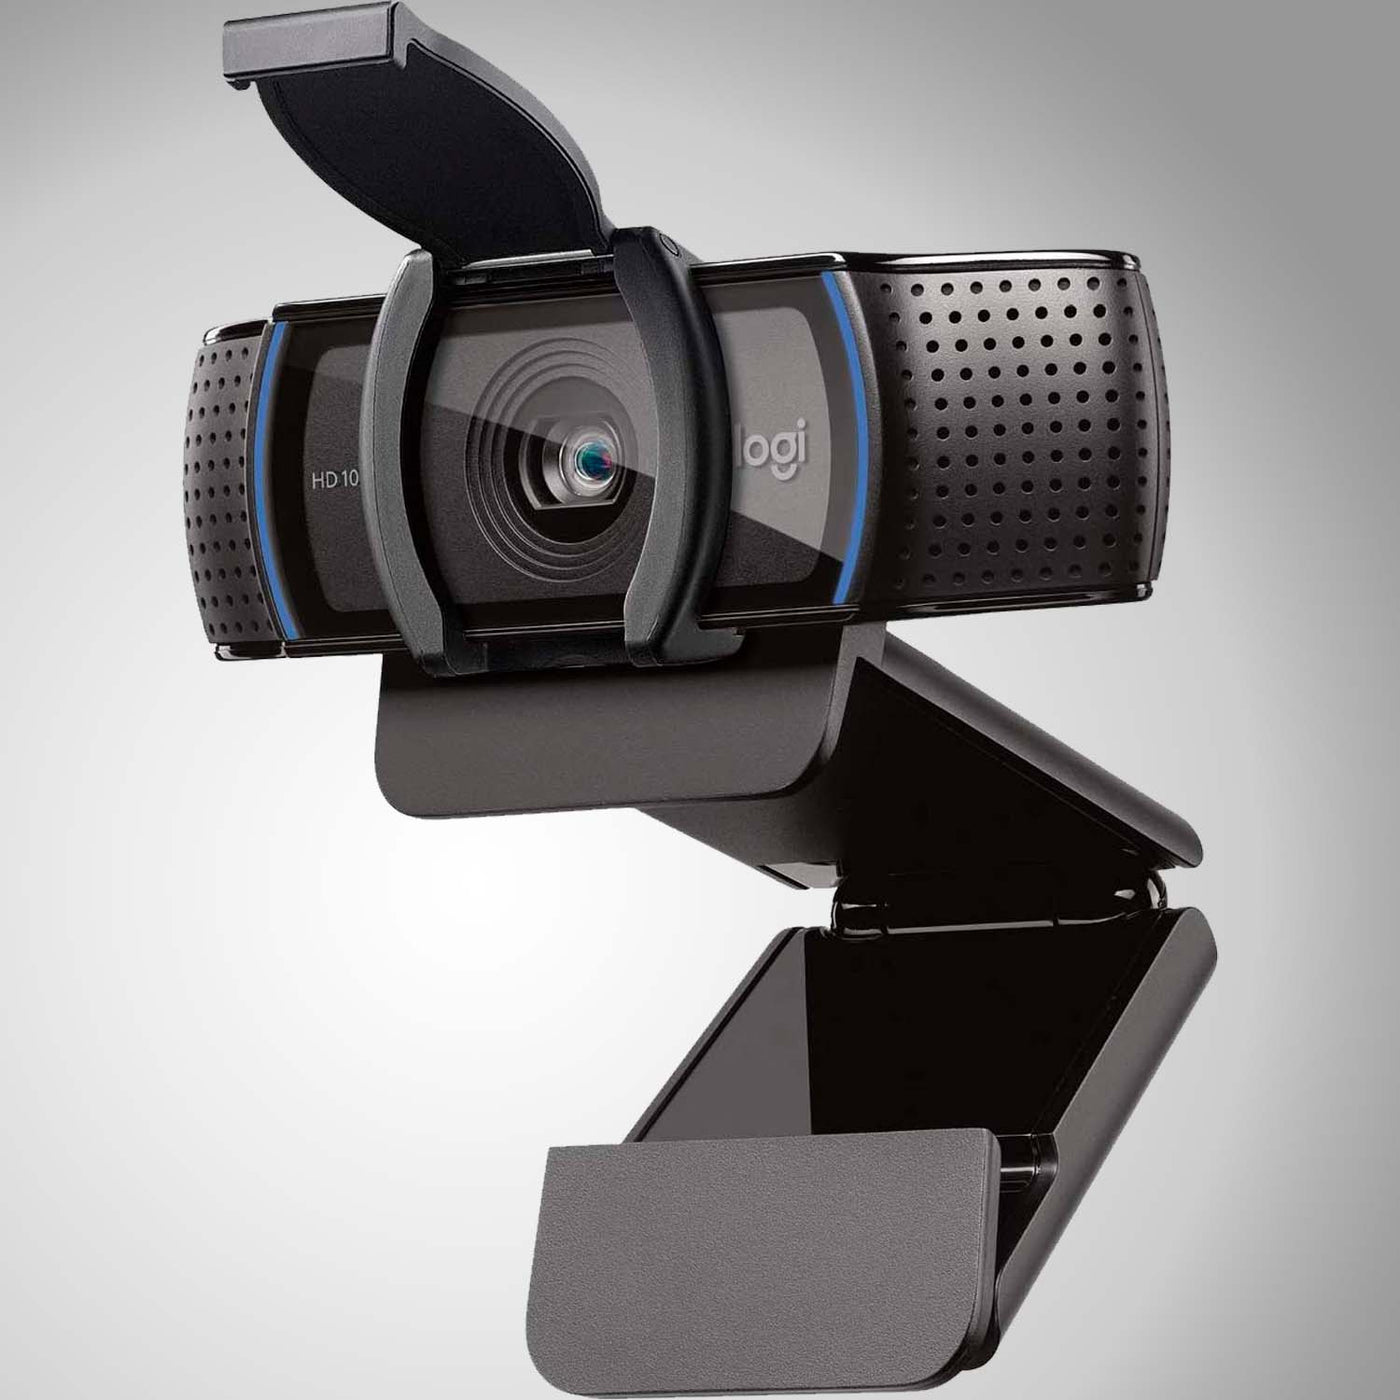 Webcam Logitech C920s Full HD 1080P USB Plug and Play